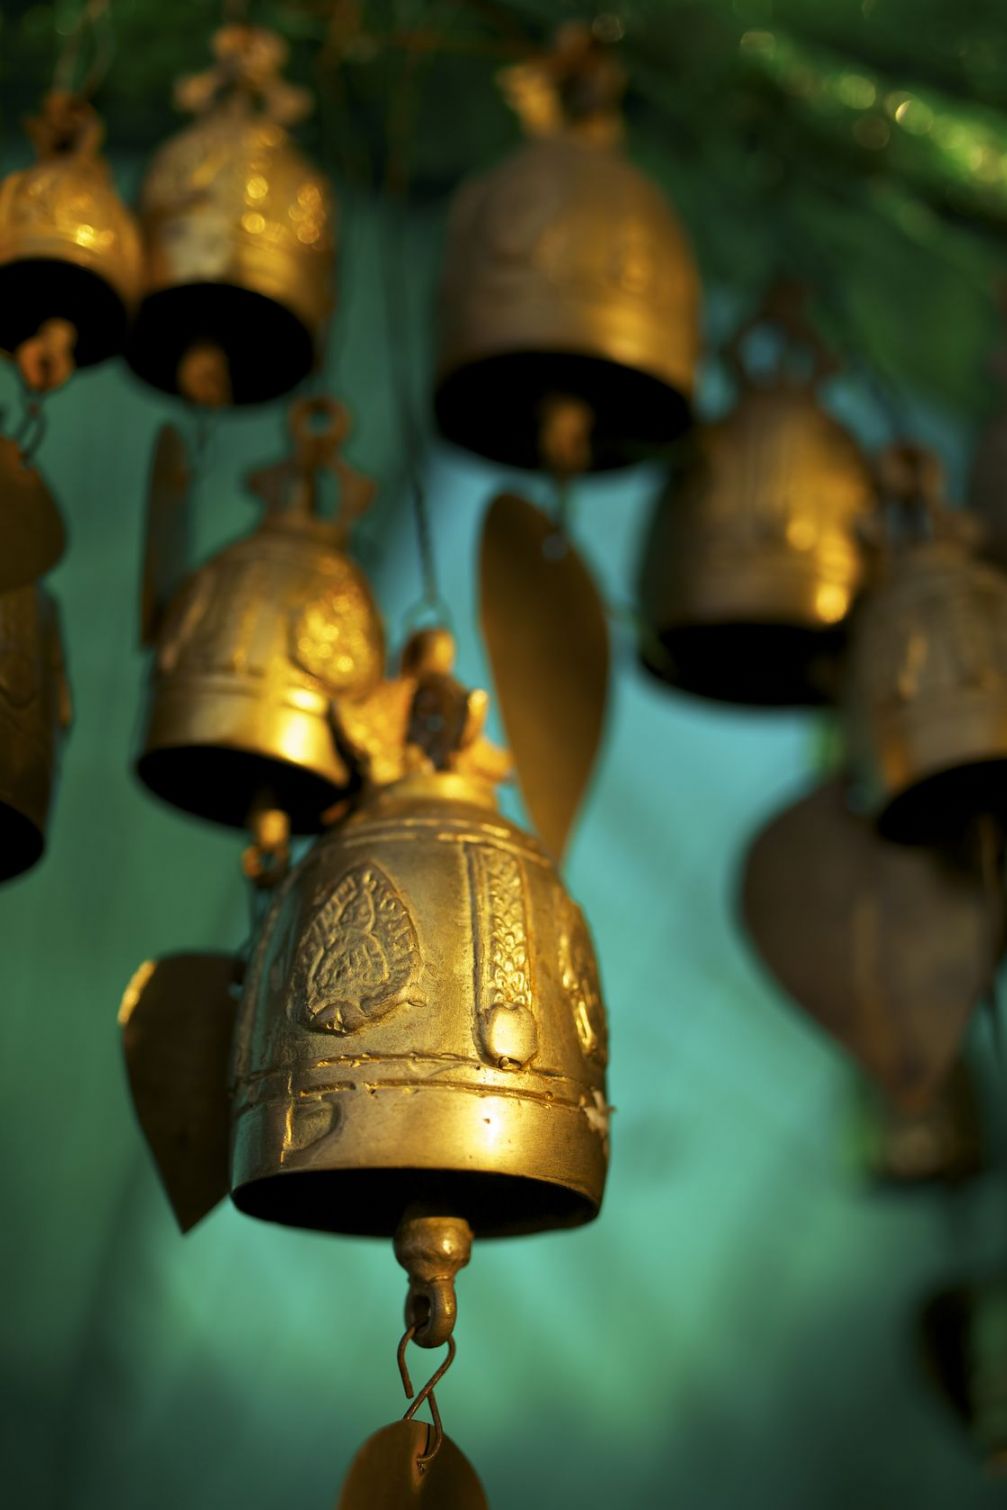 Buddhist bells